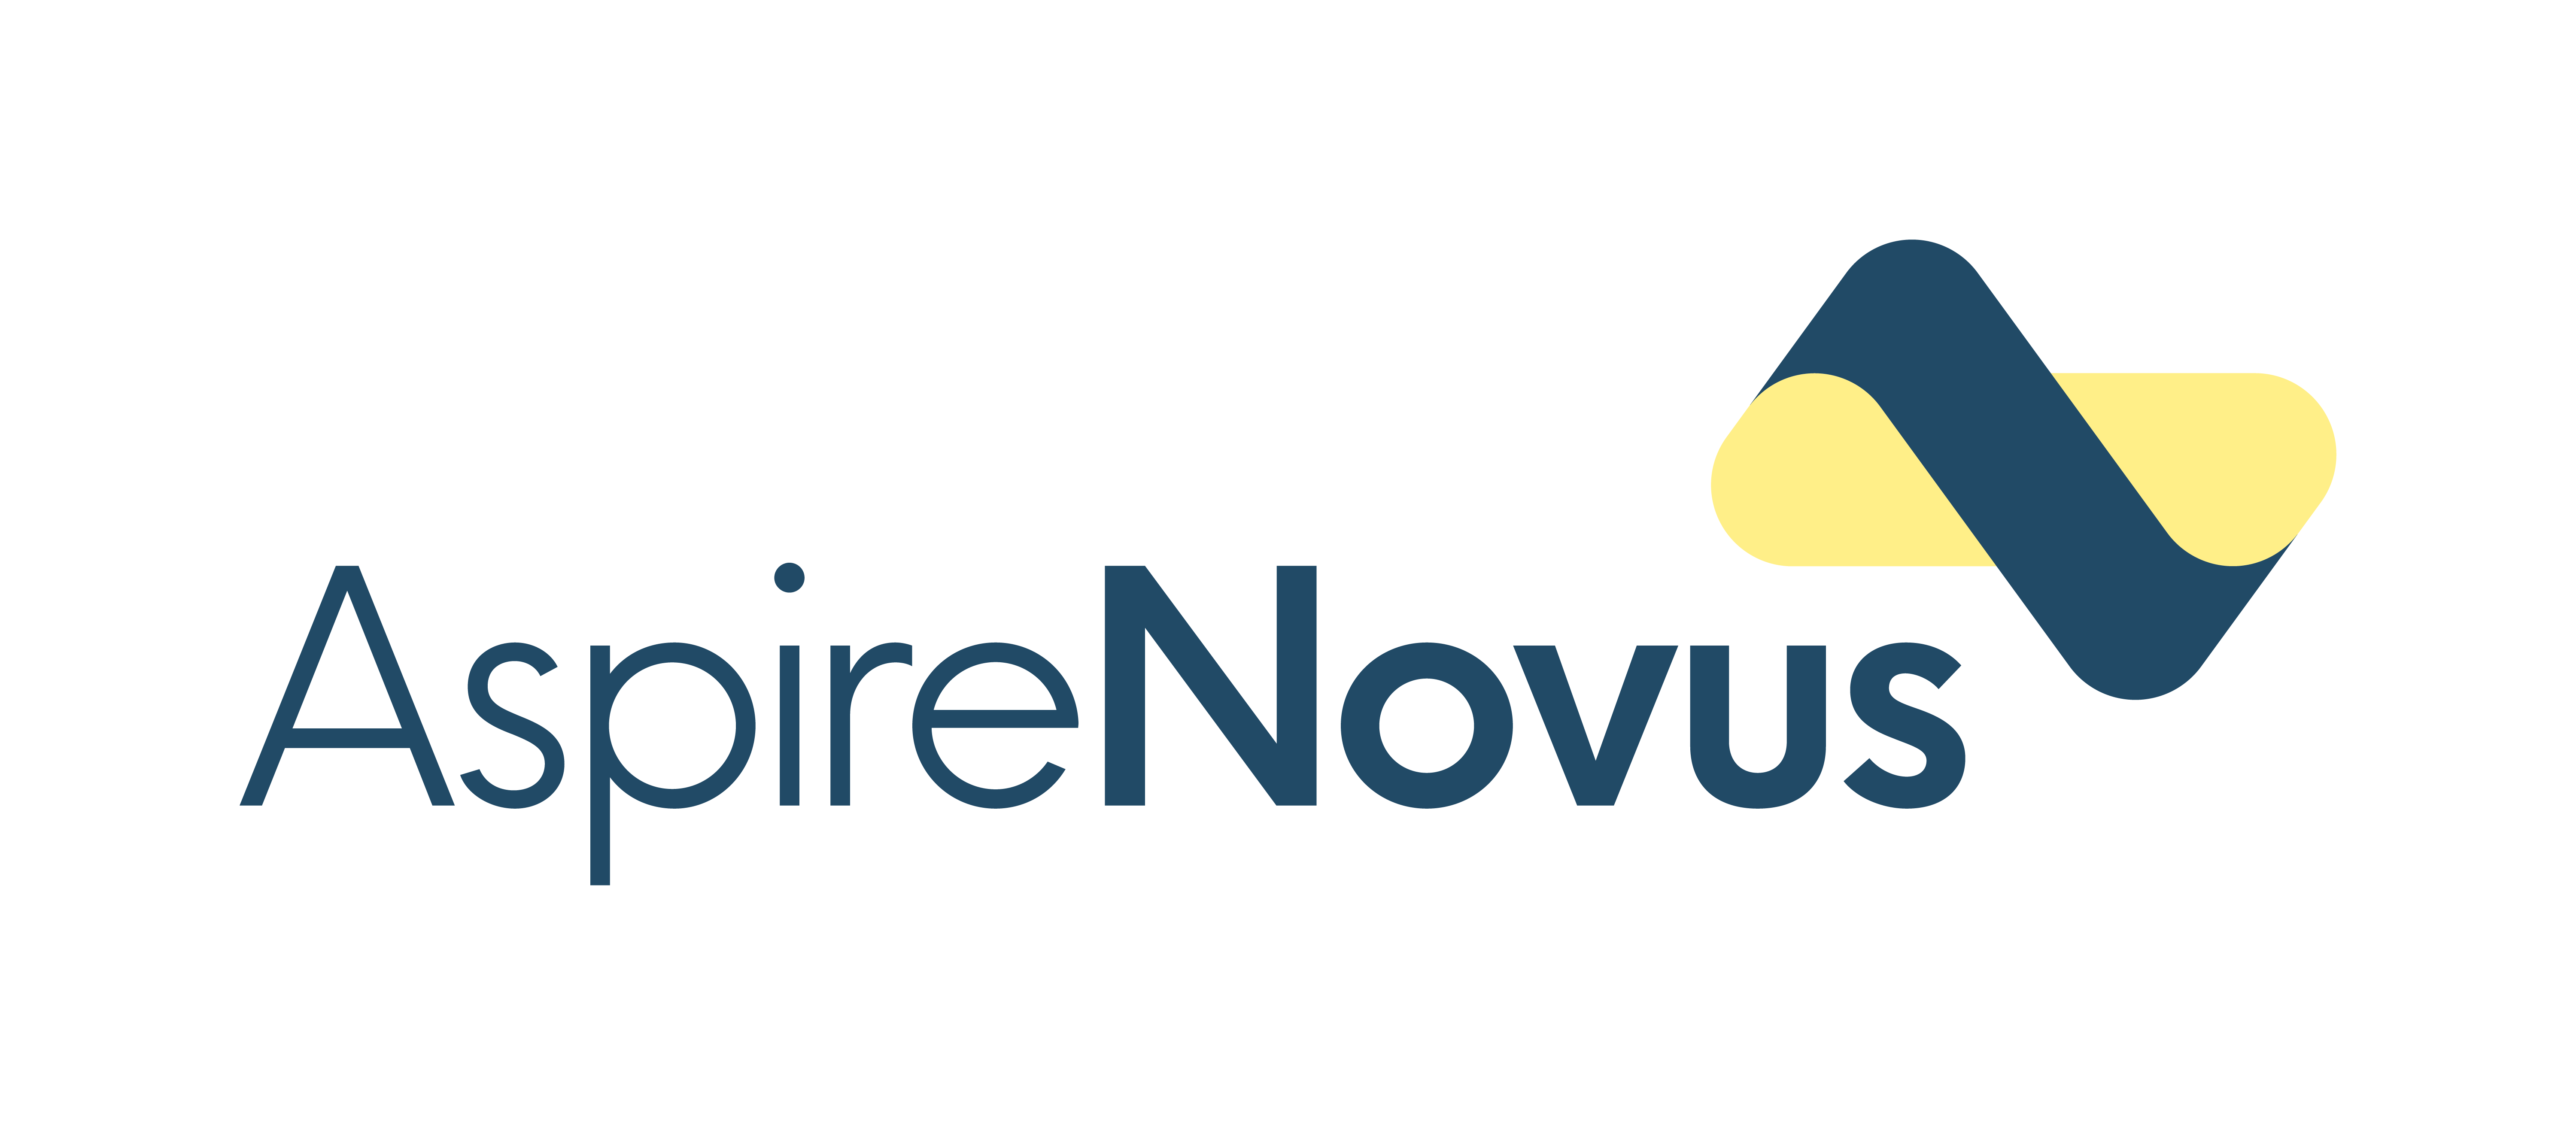 Aspire Novus